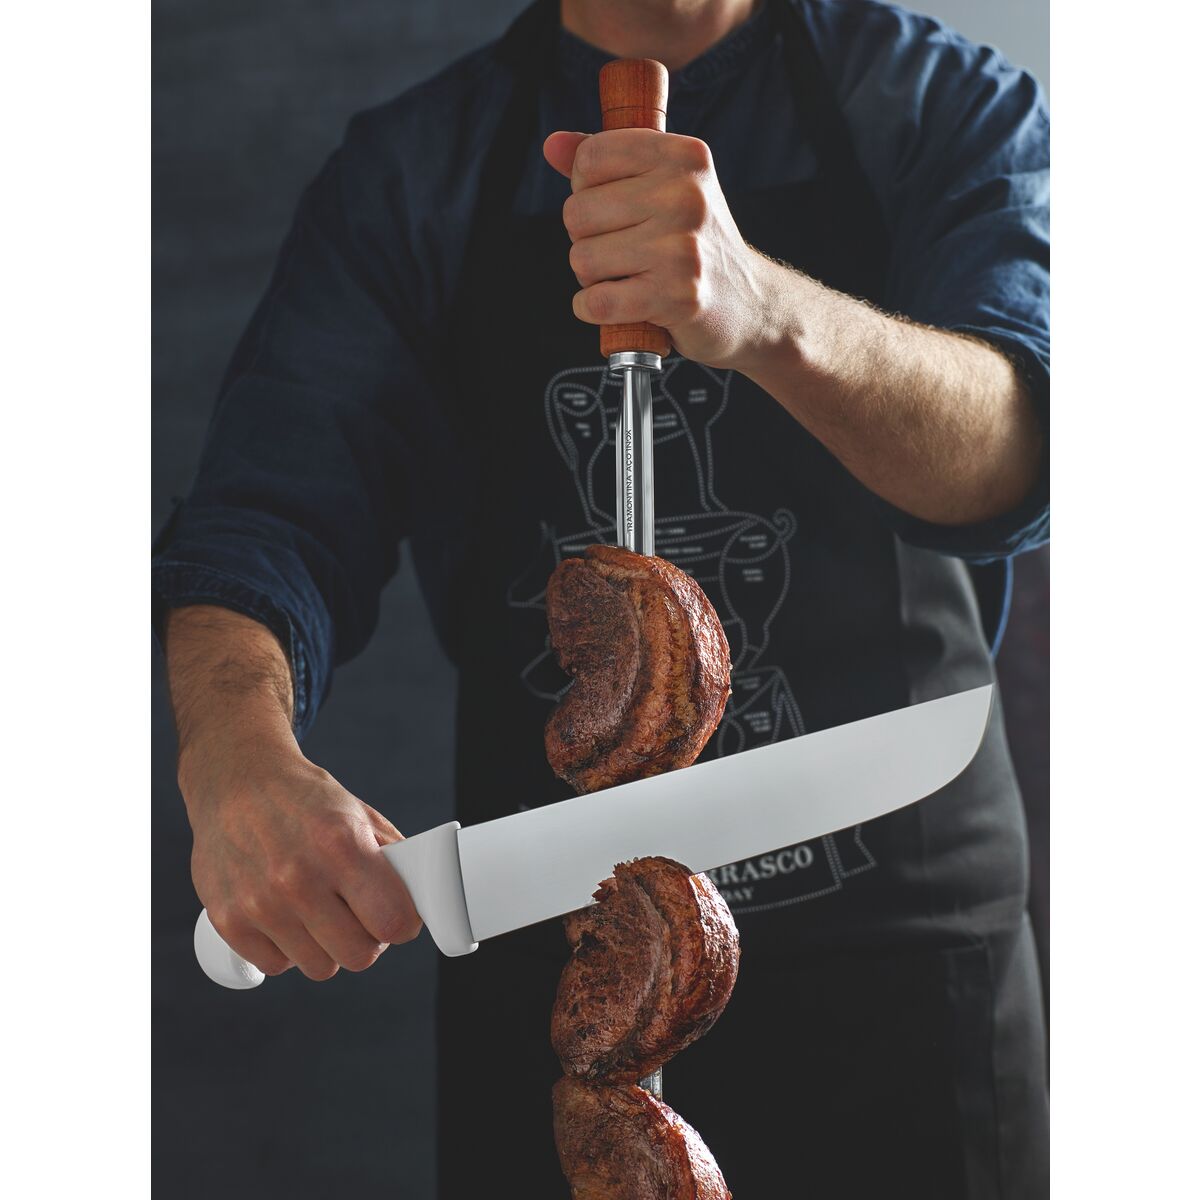 Cuchillo para Carne 12 Tramontina Profesional con Lámina en Acero  Inoxidable y Mango en Polipropileno Blanco - Tramontina Store